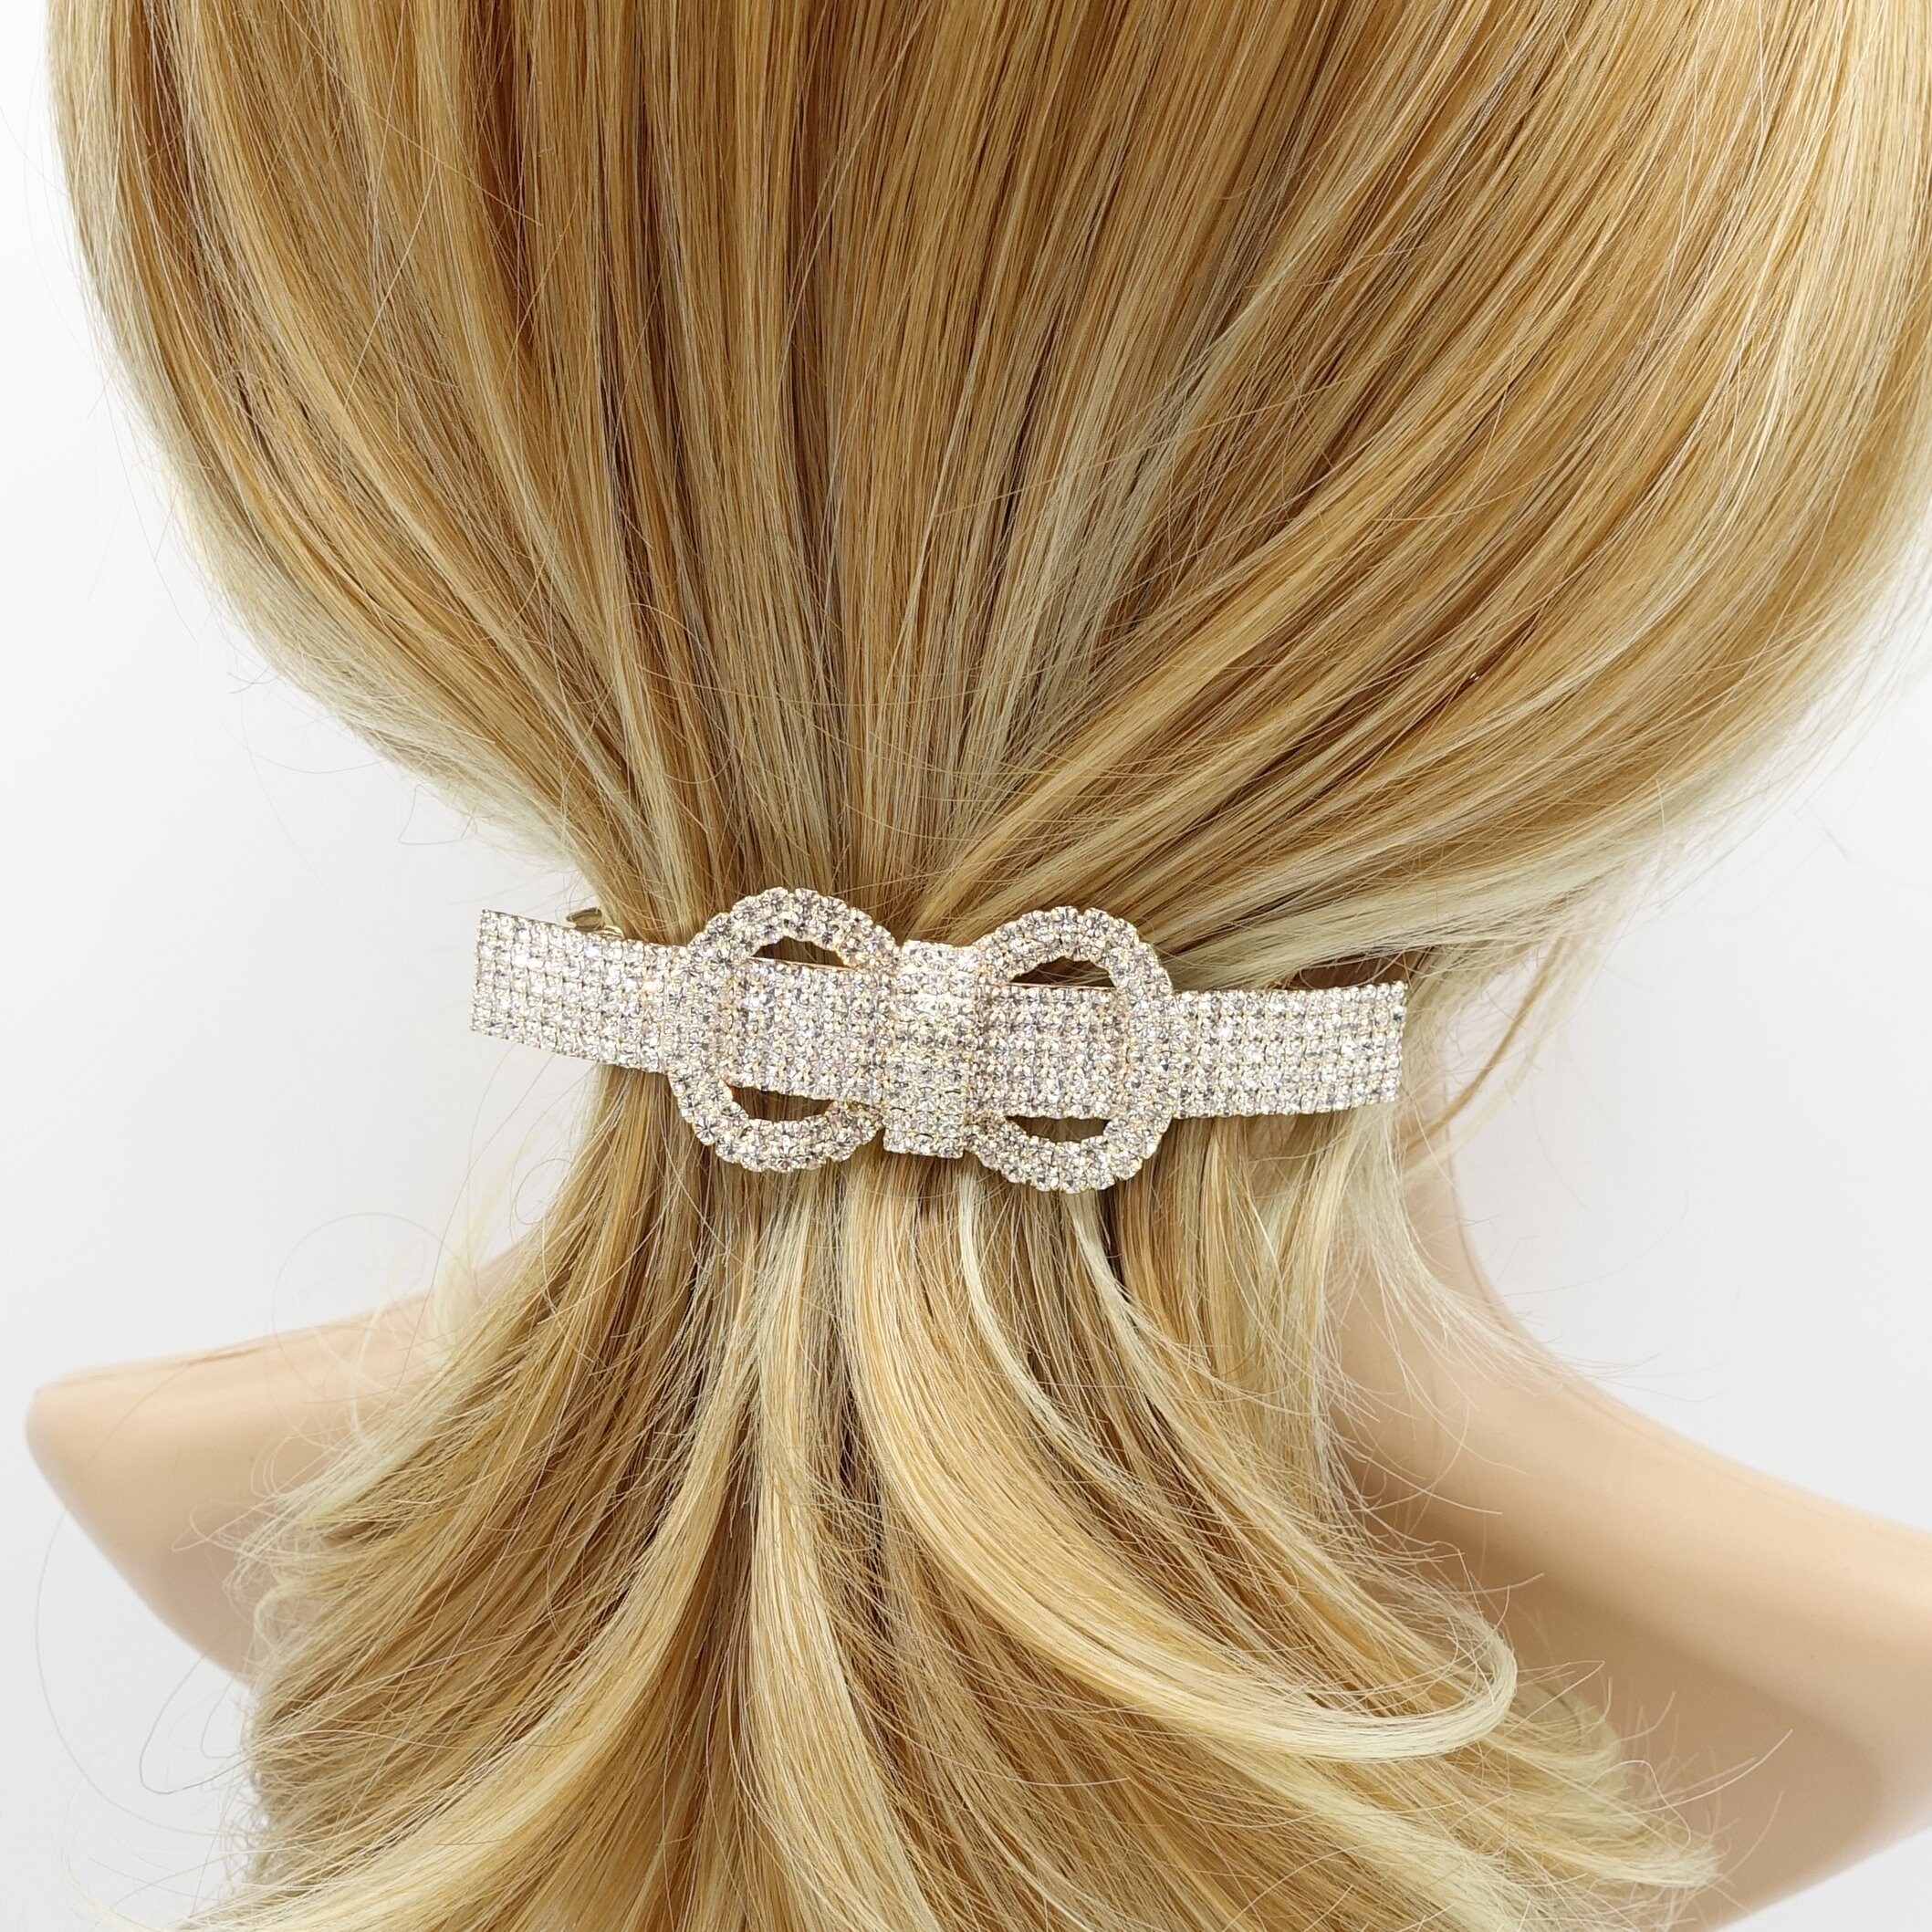 Velvet Hair Bow, Pearl Hair Bow, Rhinestone Hair Bow, Embellished Hair Bow for Women